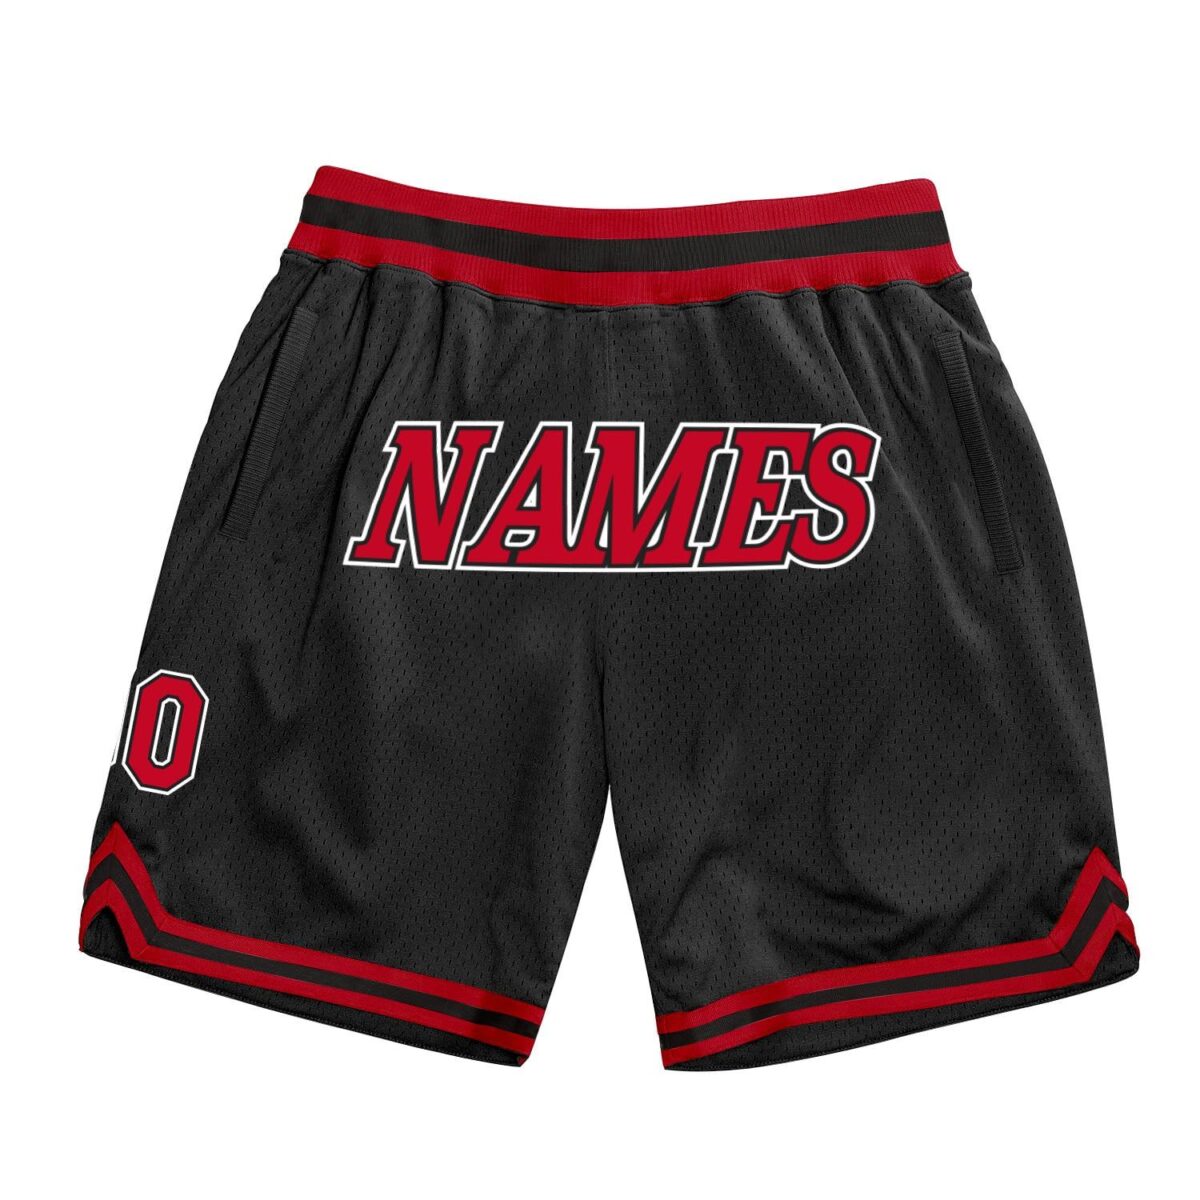 Black Red Color Basketball Shorts 1